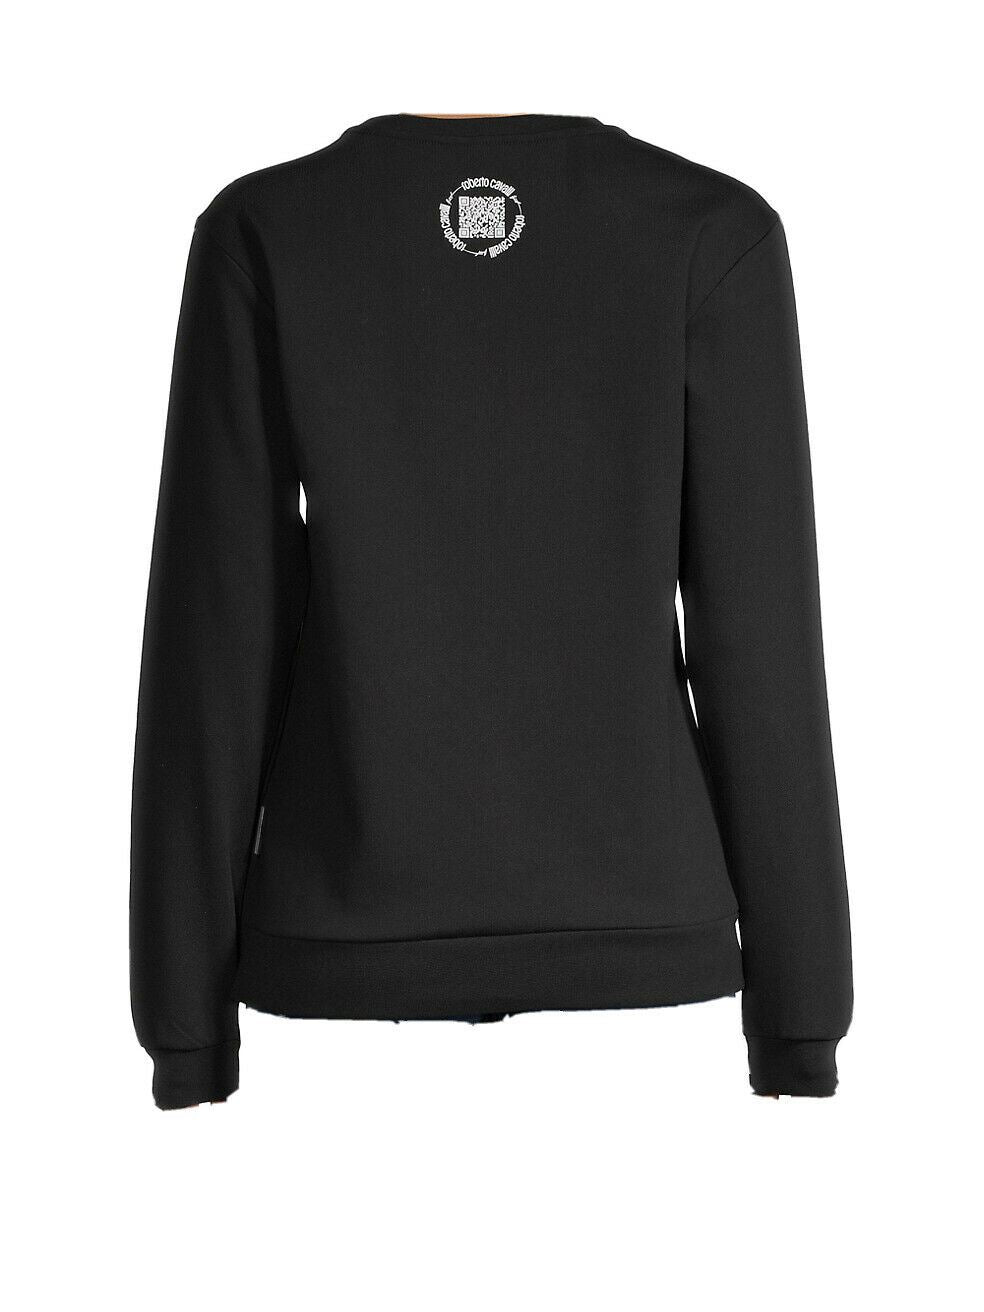 NWT $450 Roberto Cavalli Crewneck Women’s Black Sweater Medium Made in Italy